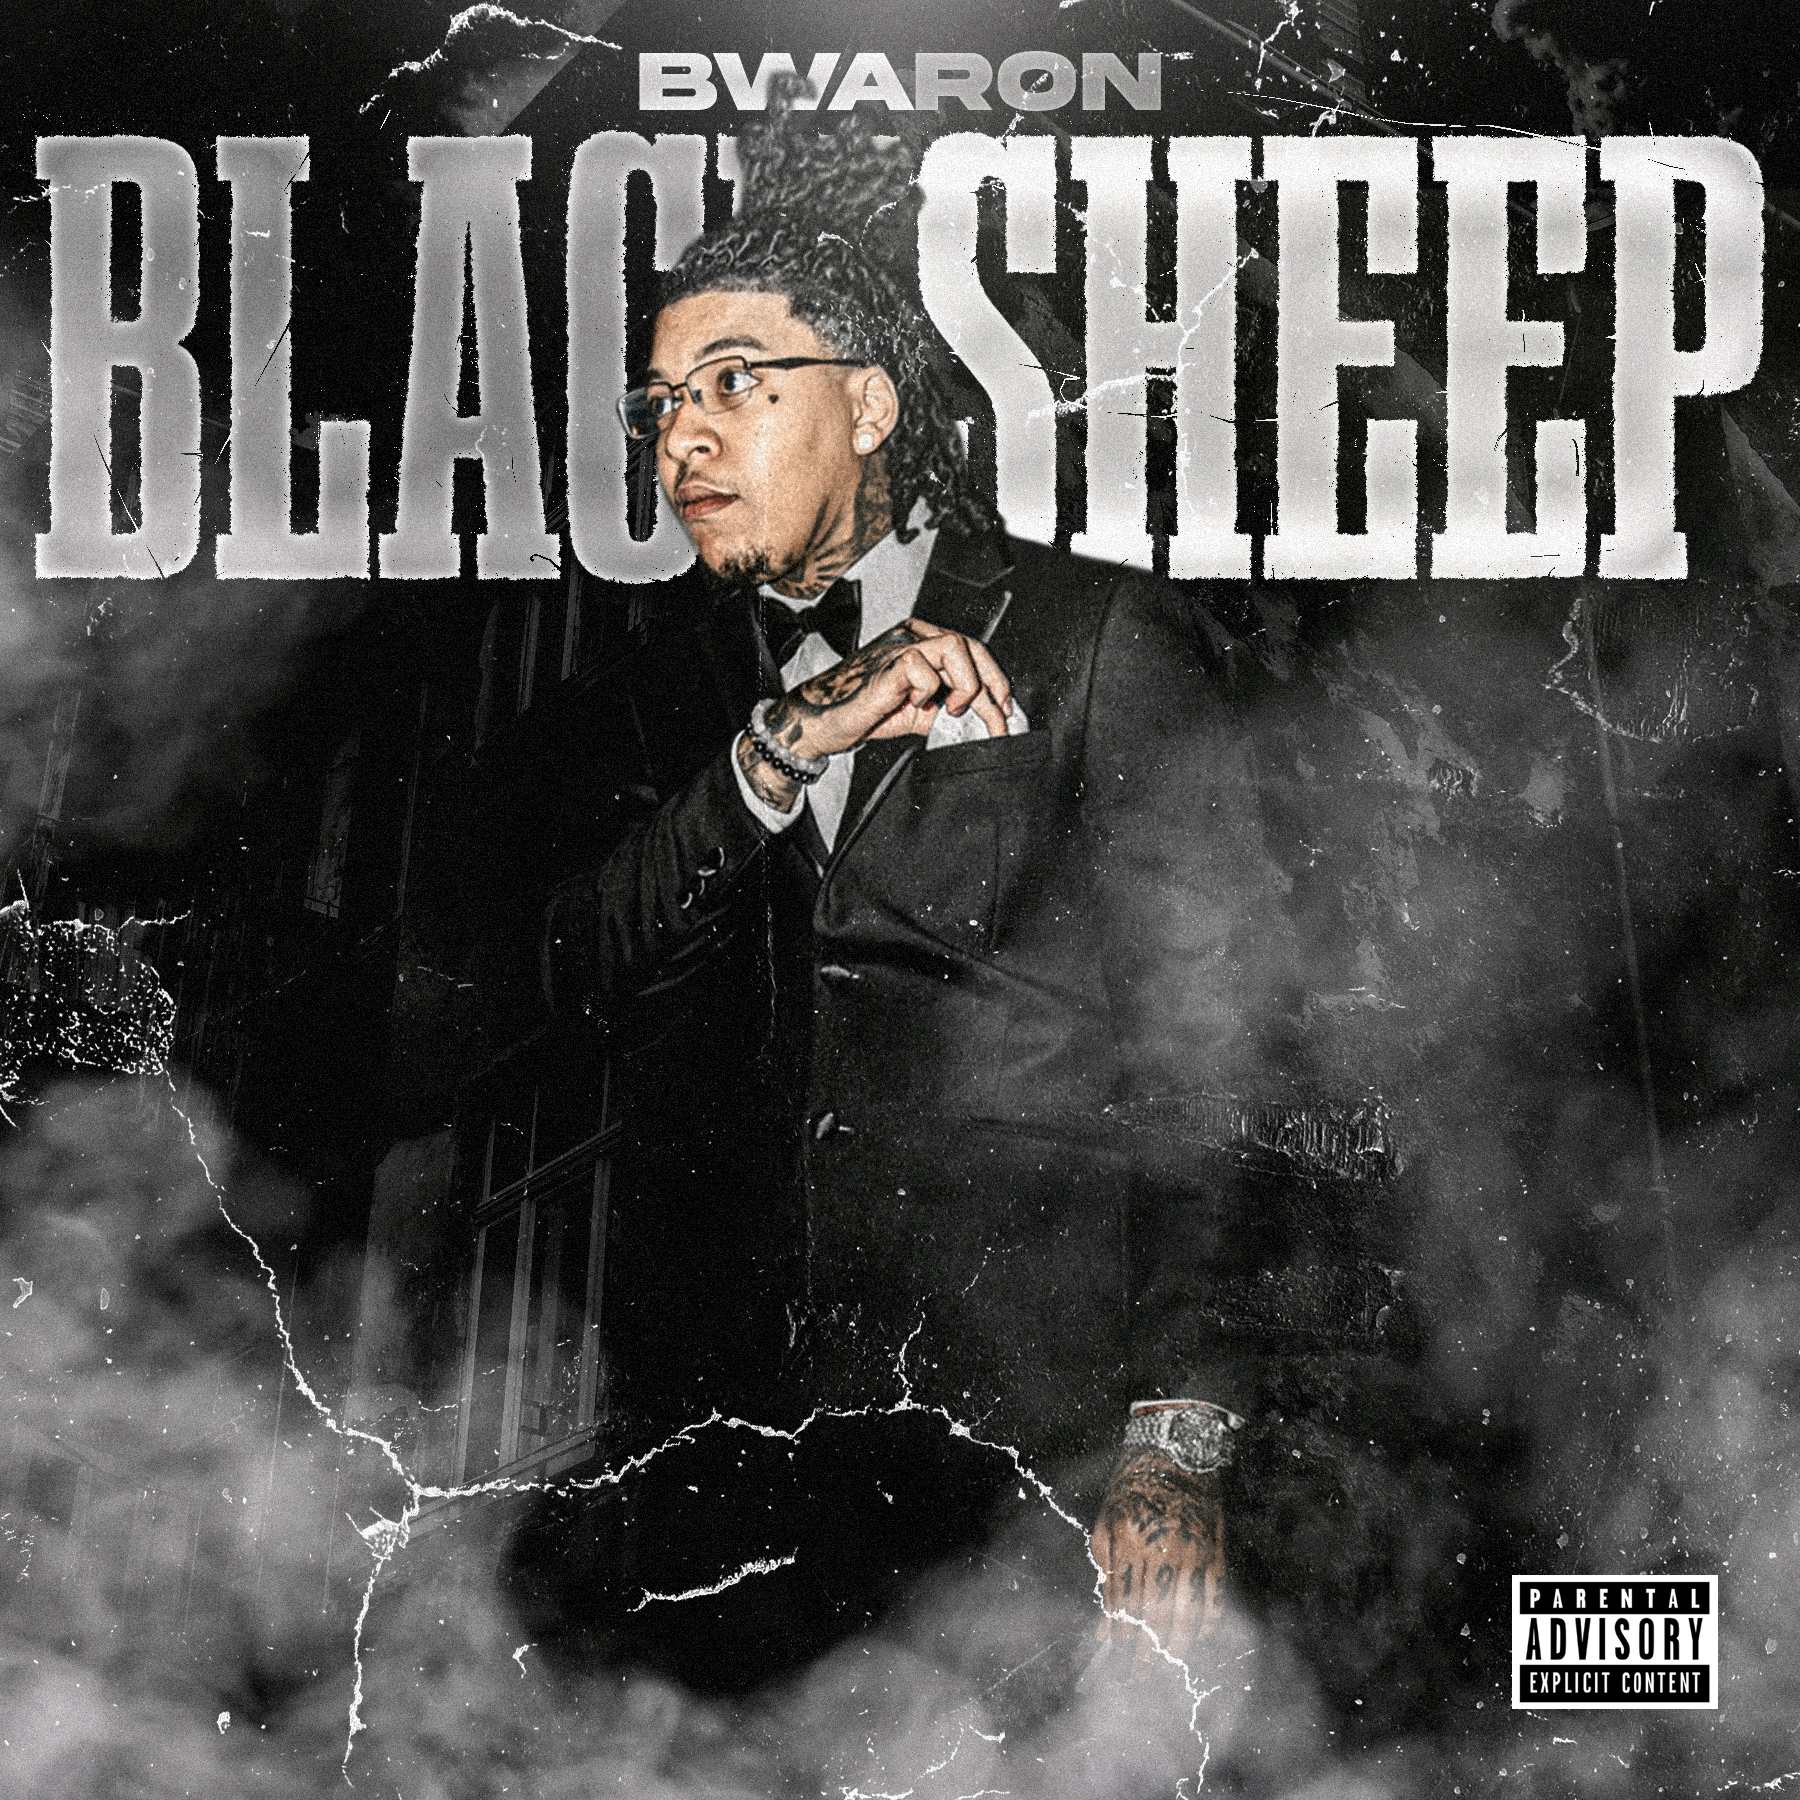 BWA Ron  - Black Sheep 3 Cover Art